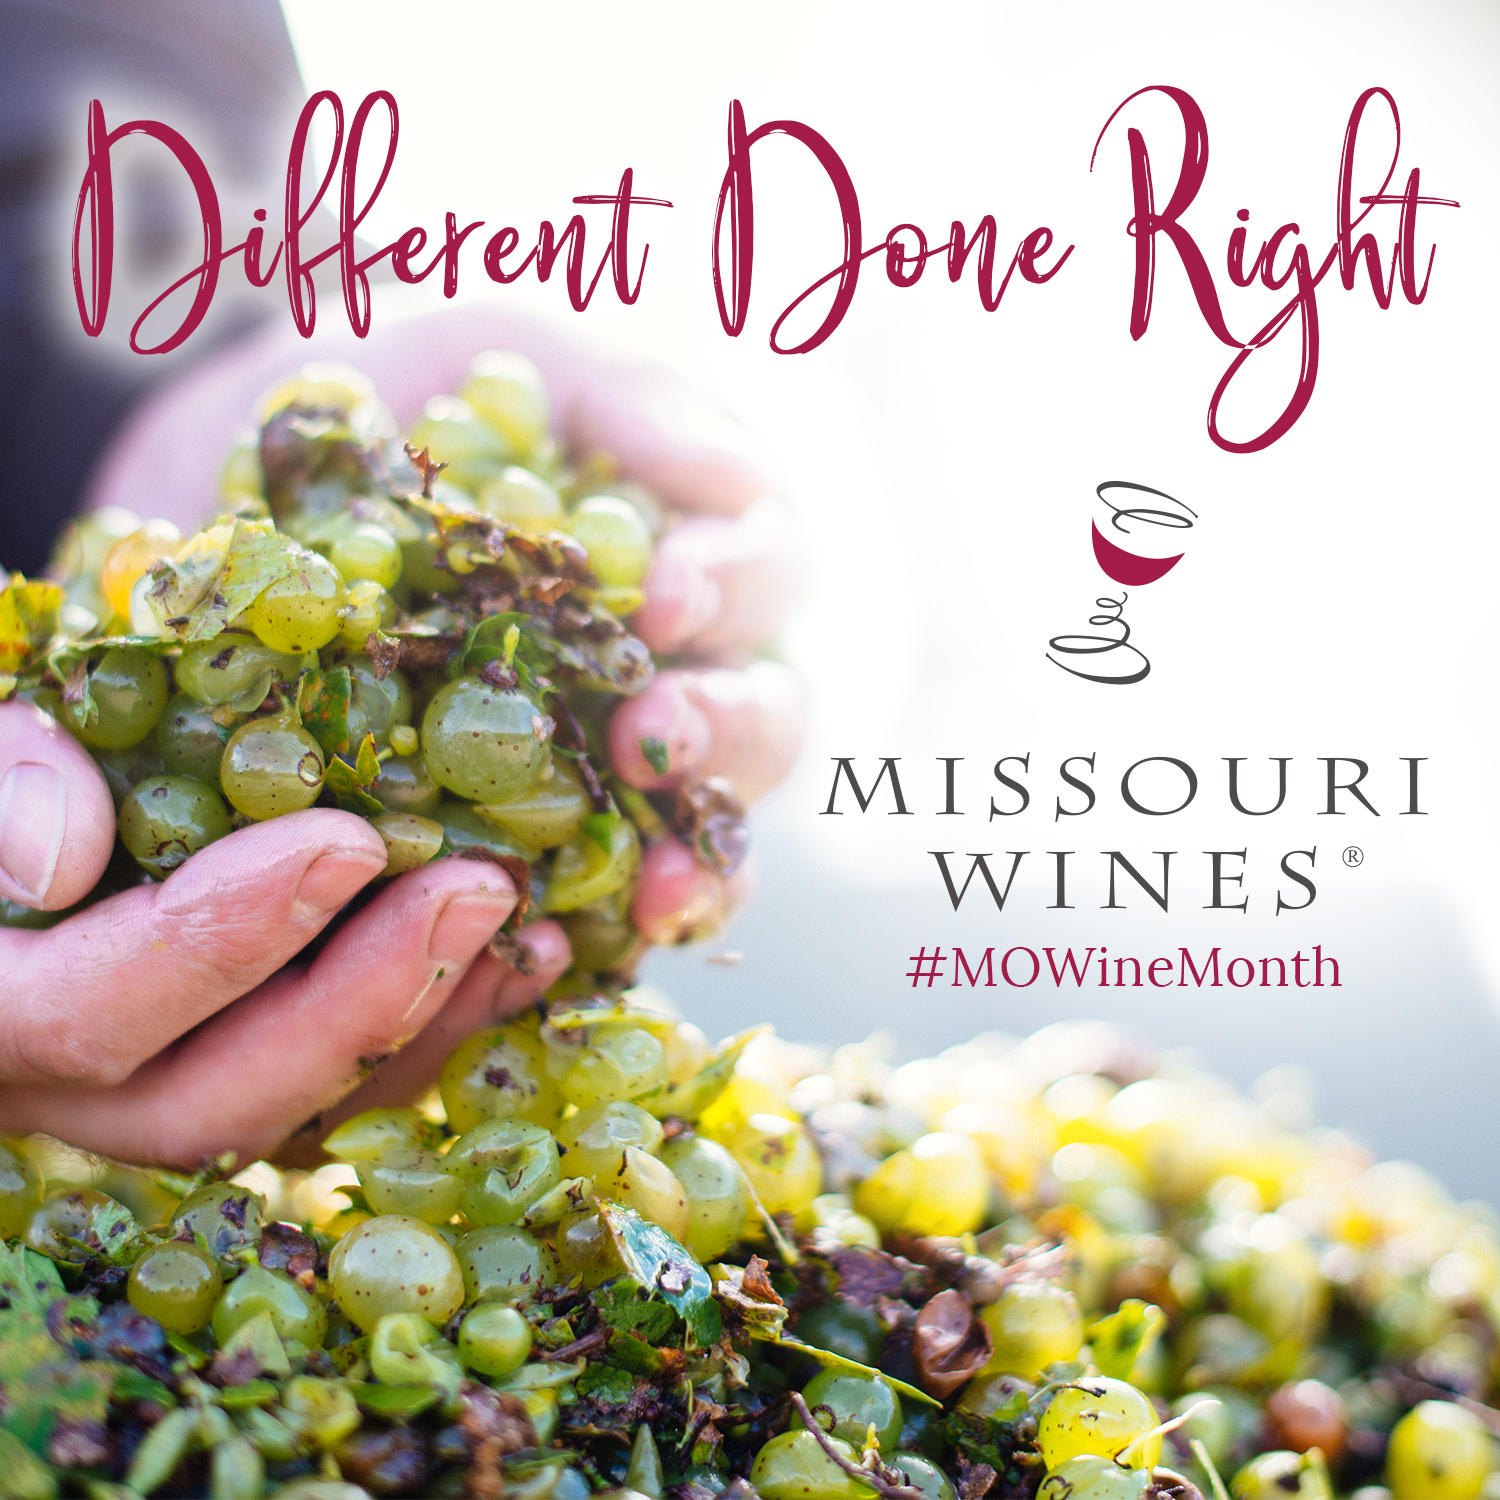 Celebrating Missouri Wine Month